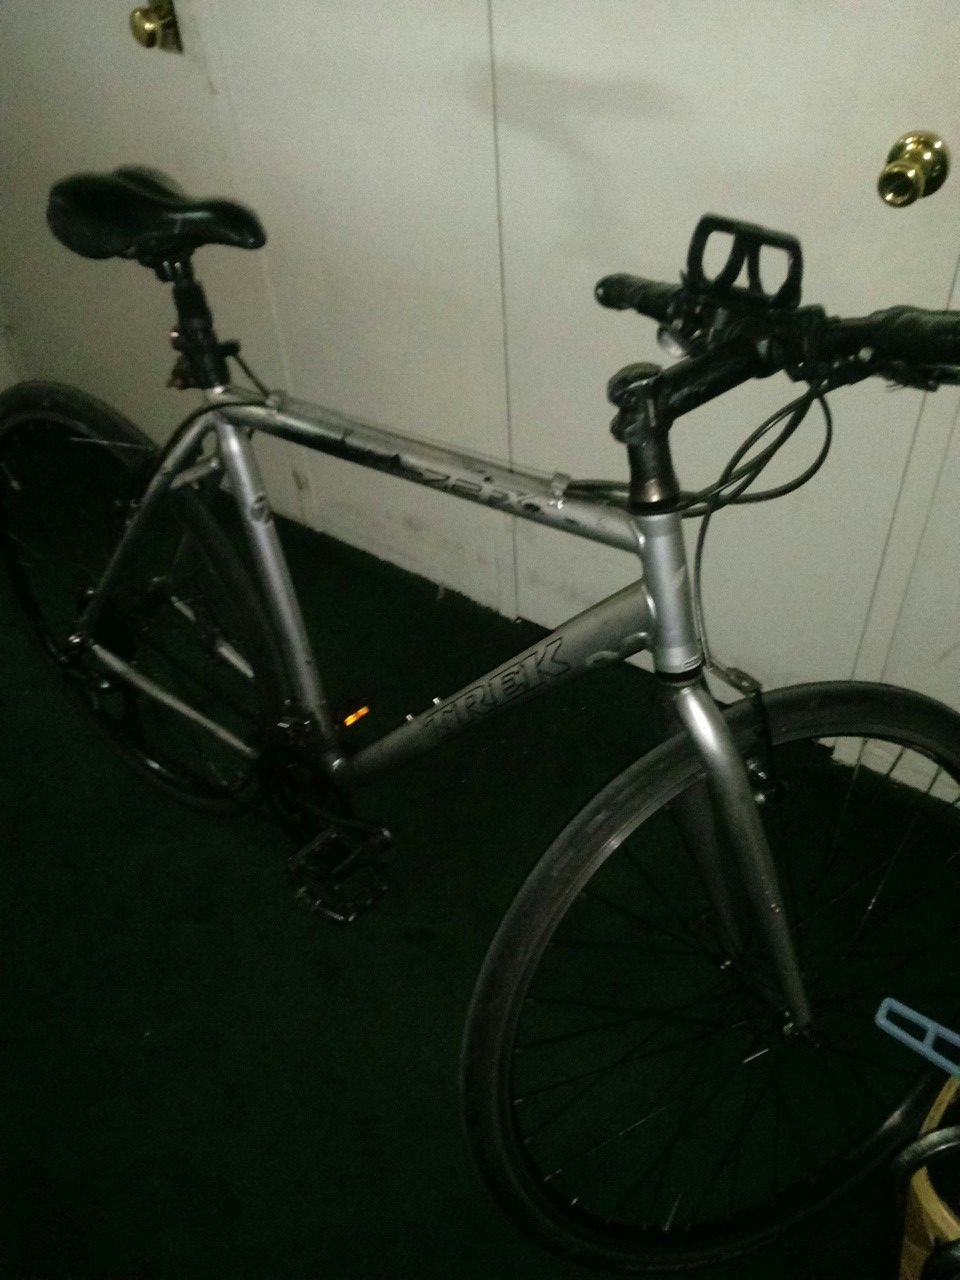 Trek fx hybrid bicycle 7.2